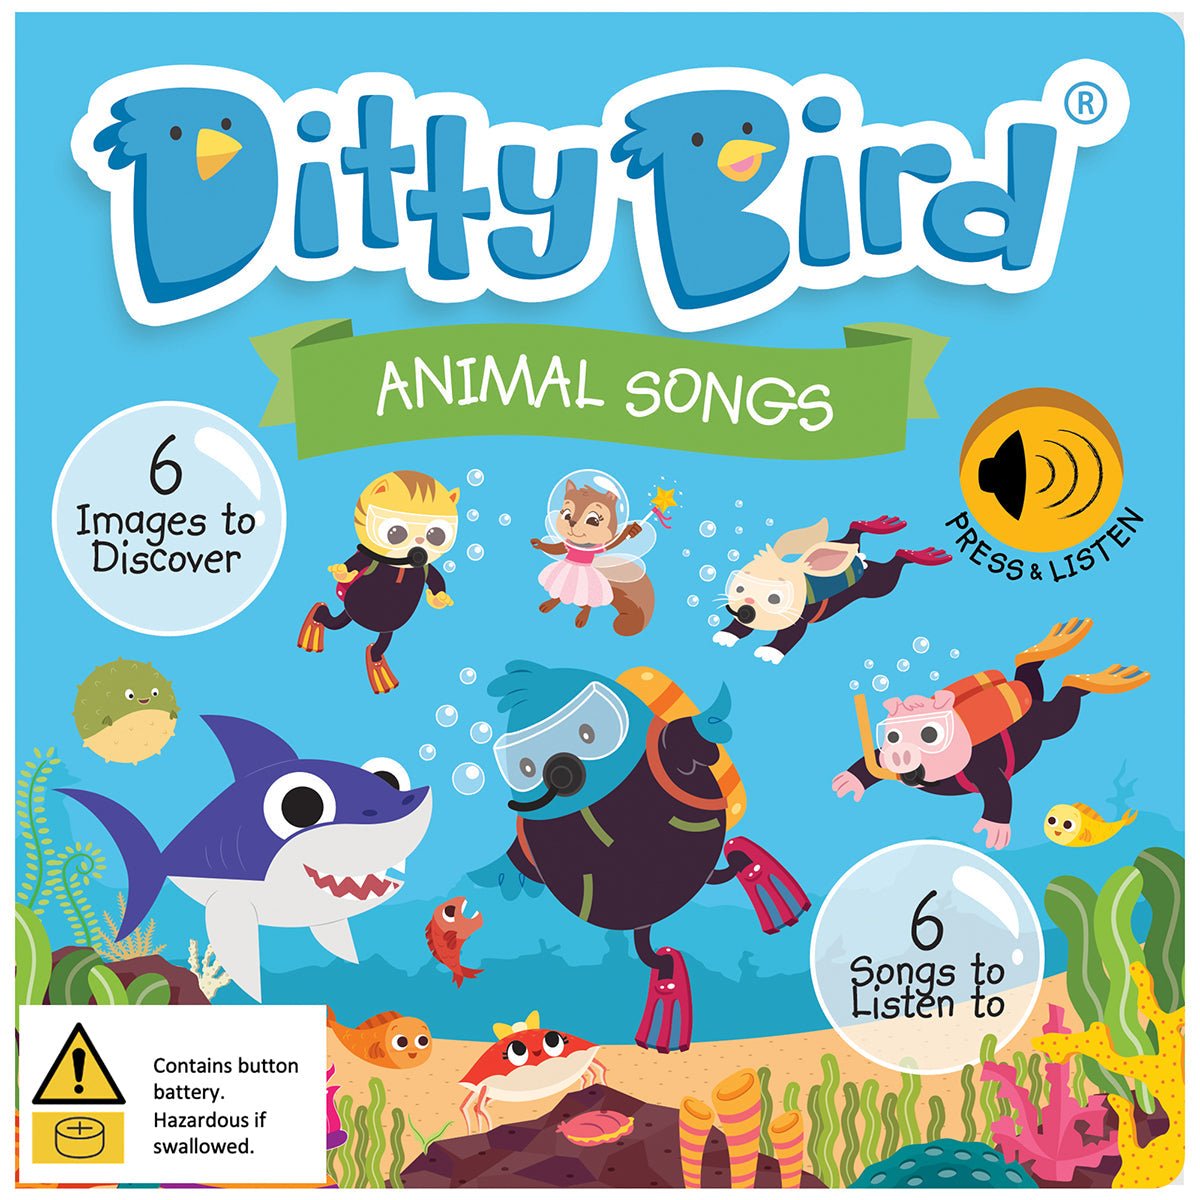 Ditty Bird Animal Songs | Ditty Bird